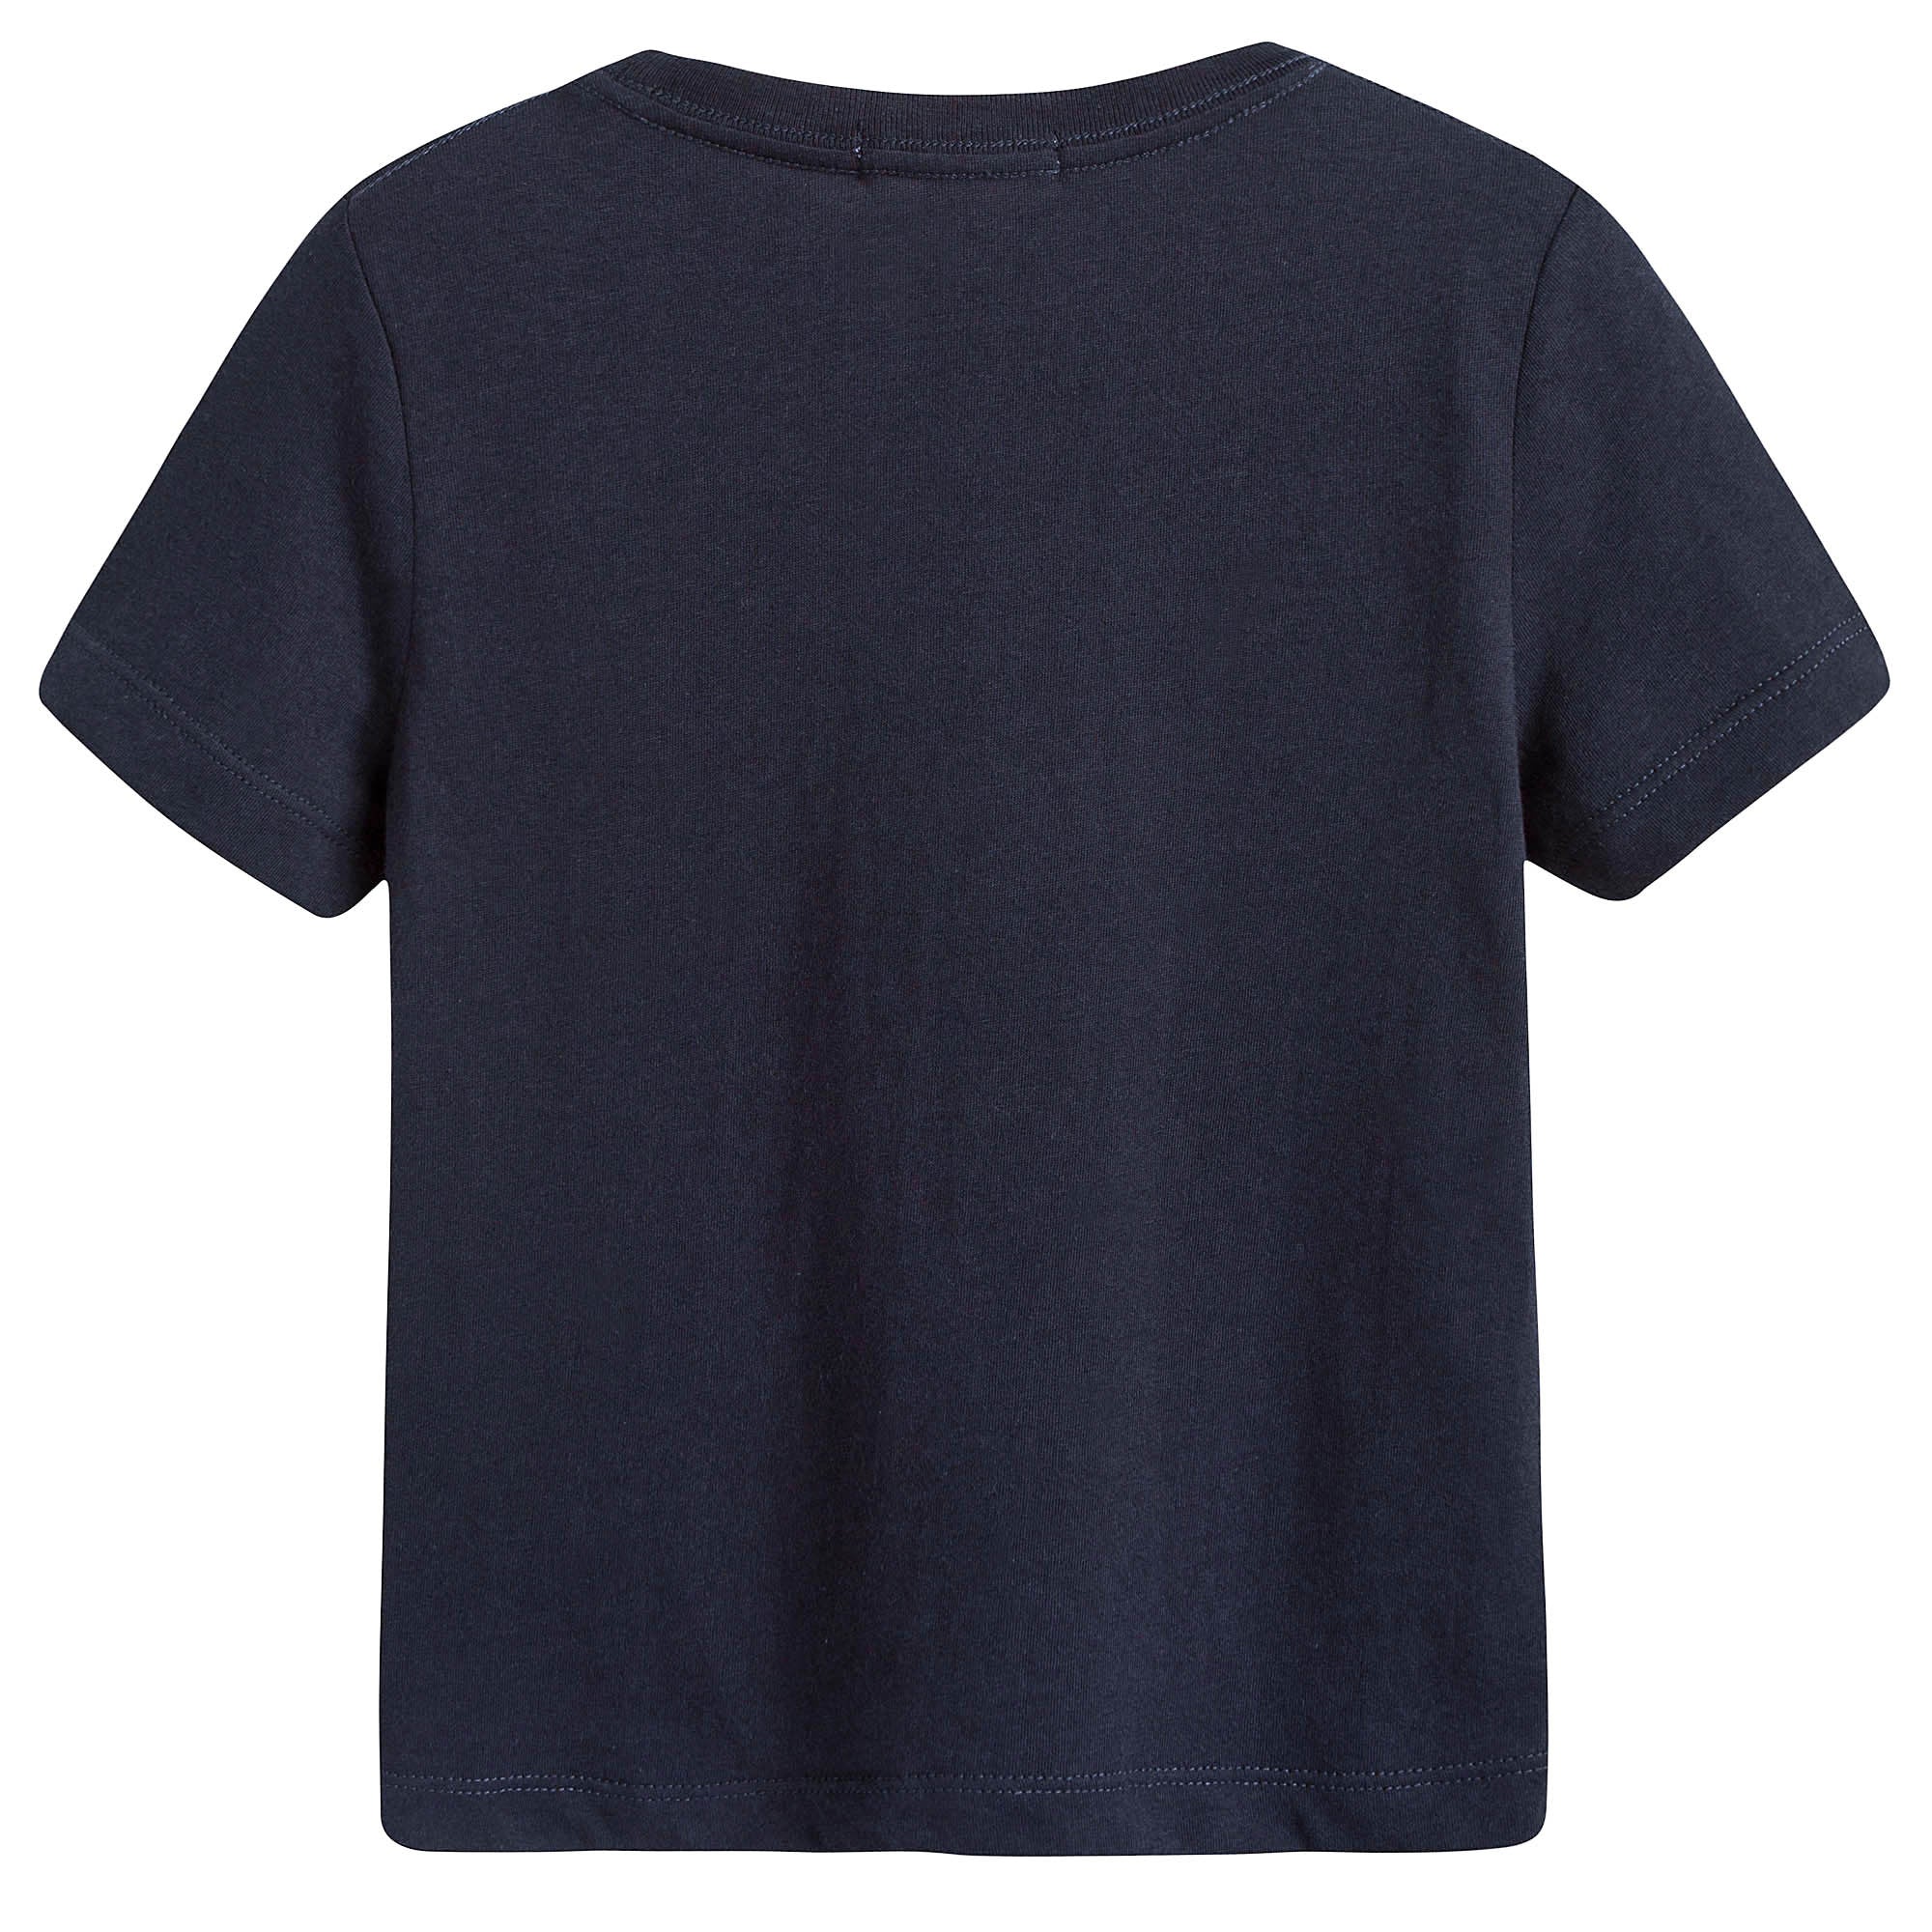 Boys Navy Blue Cotton T-shirt With Check Trim